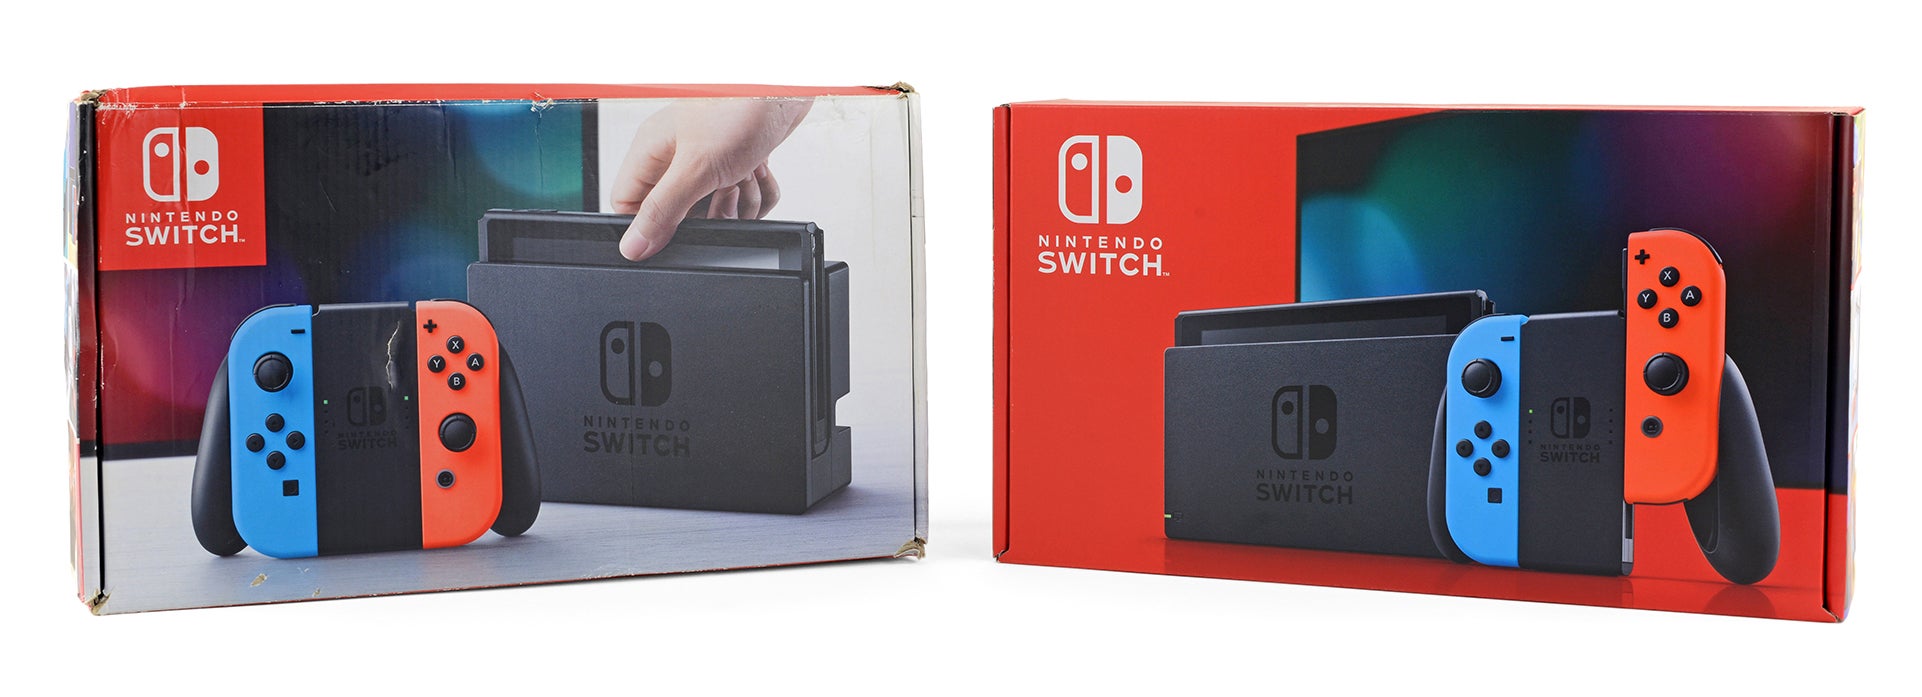 Nintendo switch 1 2 switch. Nintendo Switch 2. Нинтендо свитч 2017. Коробка Нинтендо свитч 2. Nintendo Switch v1.